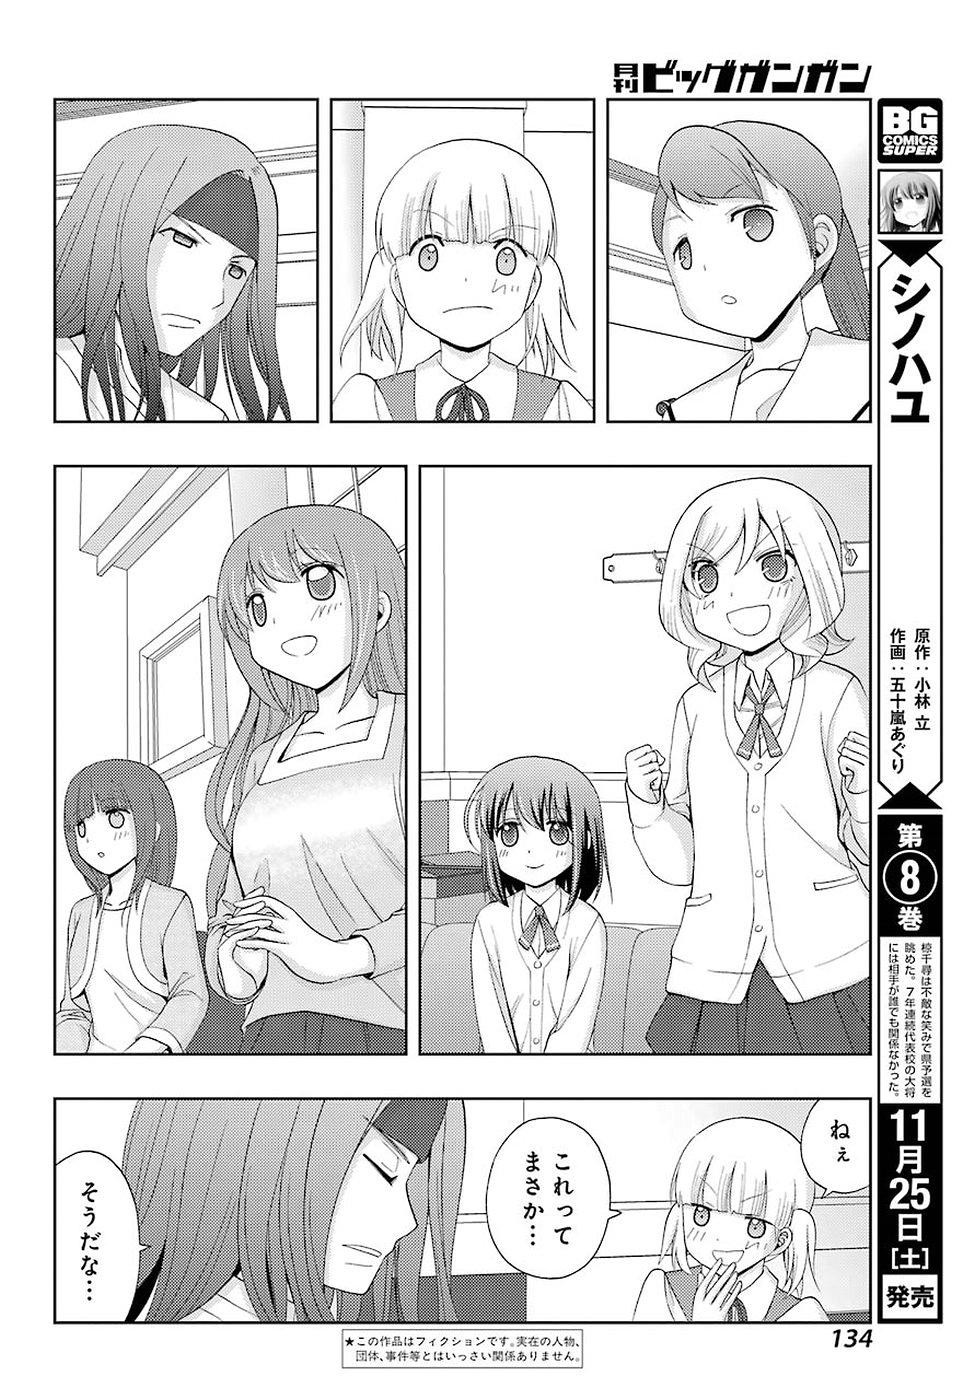 Shinohayu - The Dawn of Age Manga - Chapter 050.5 - Page 3